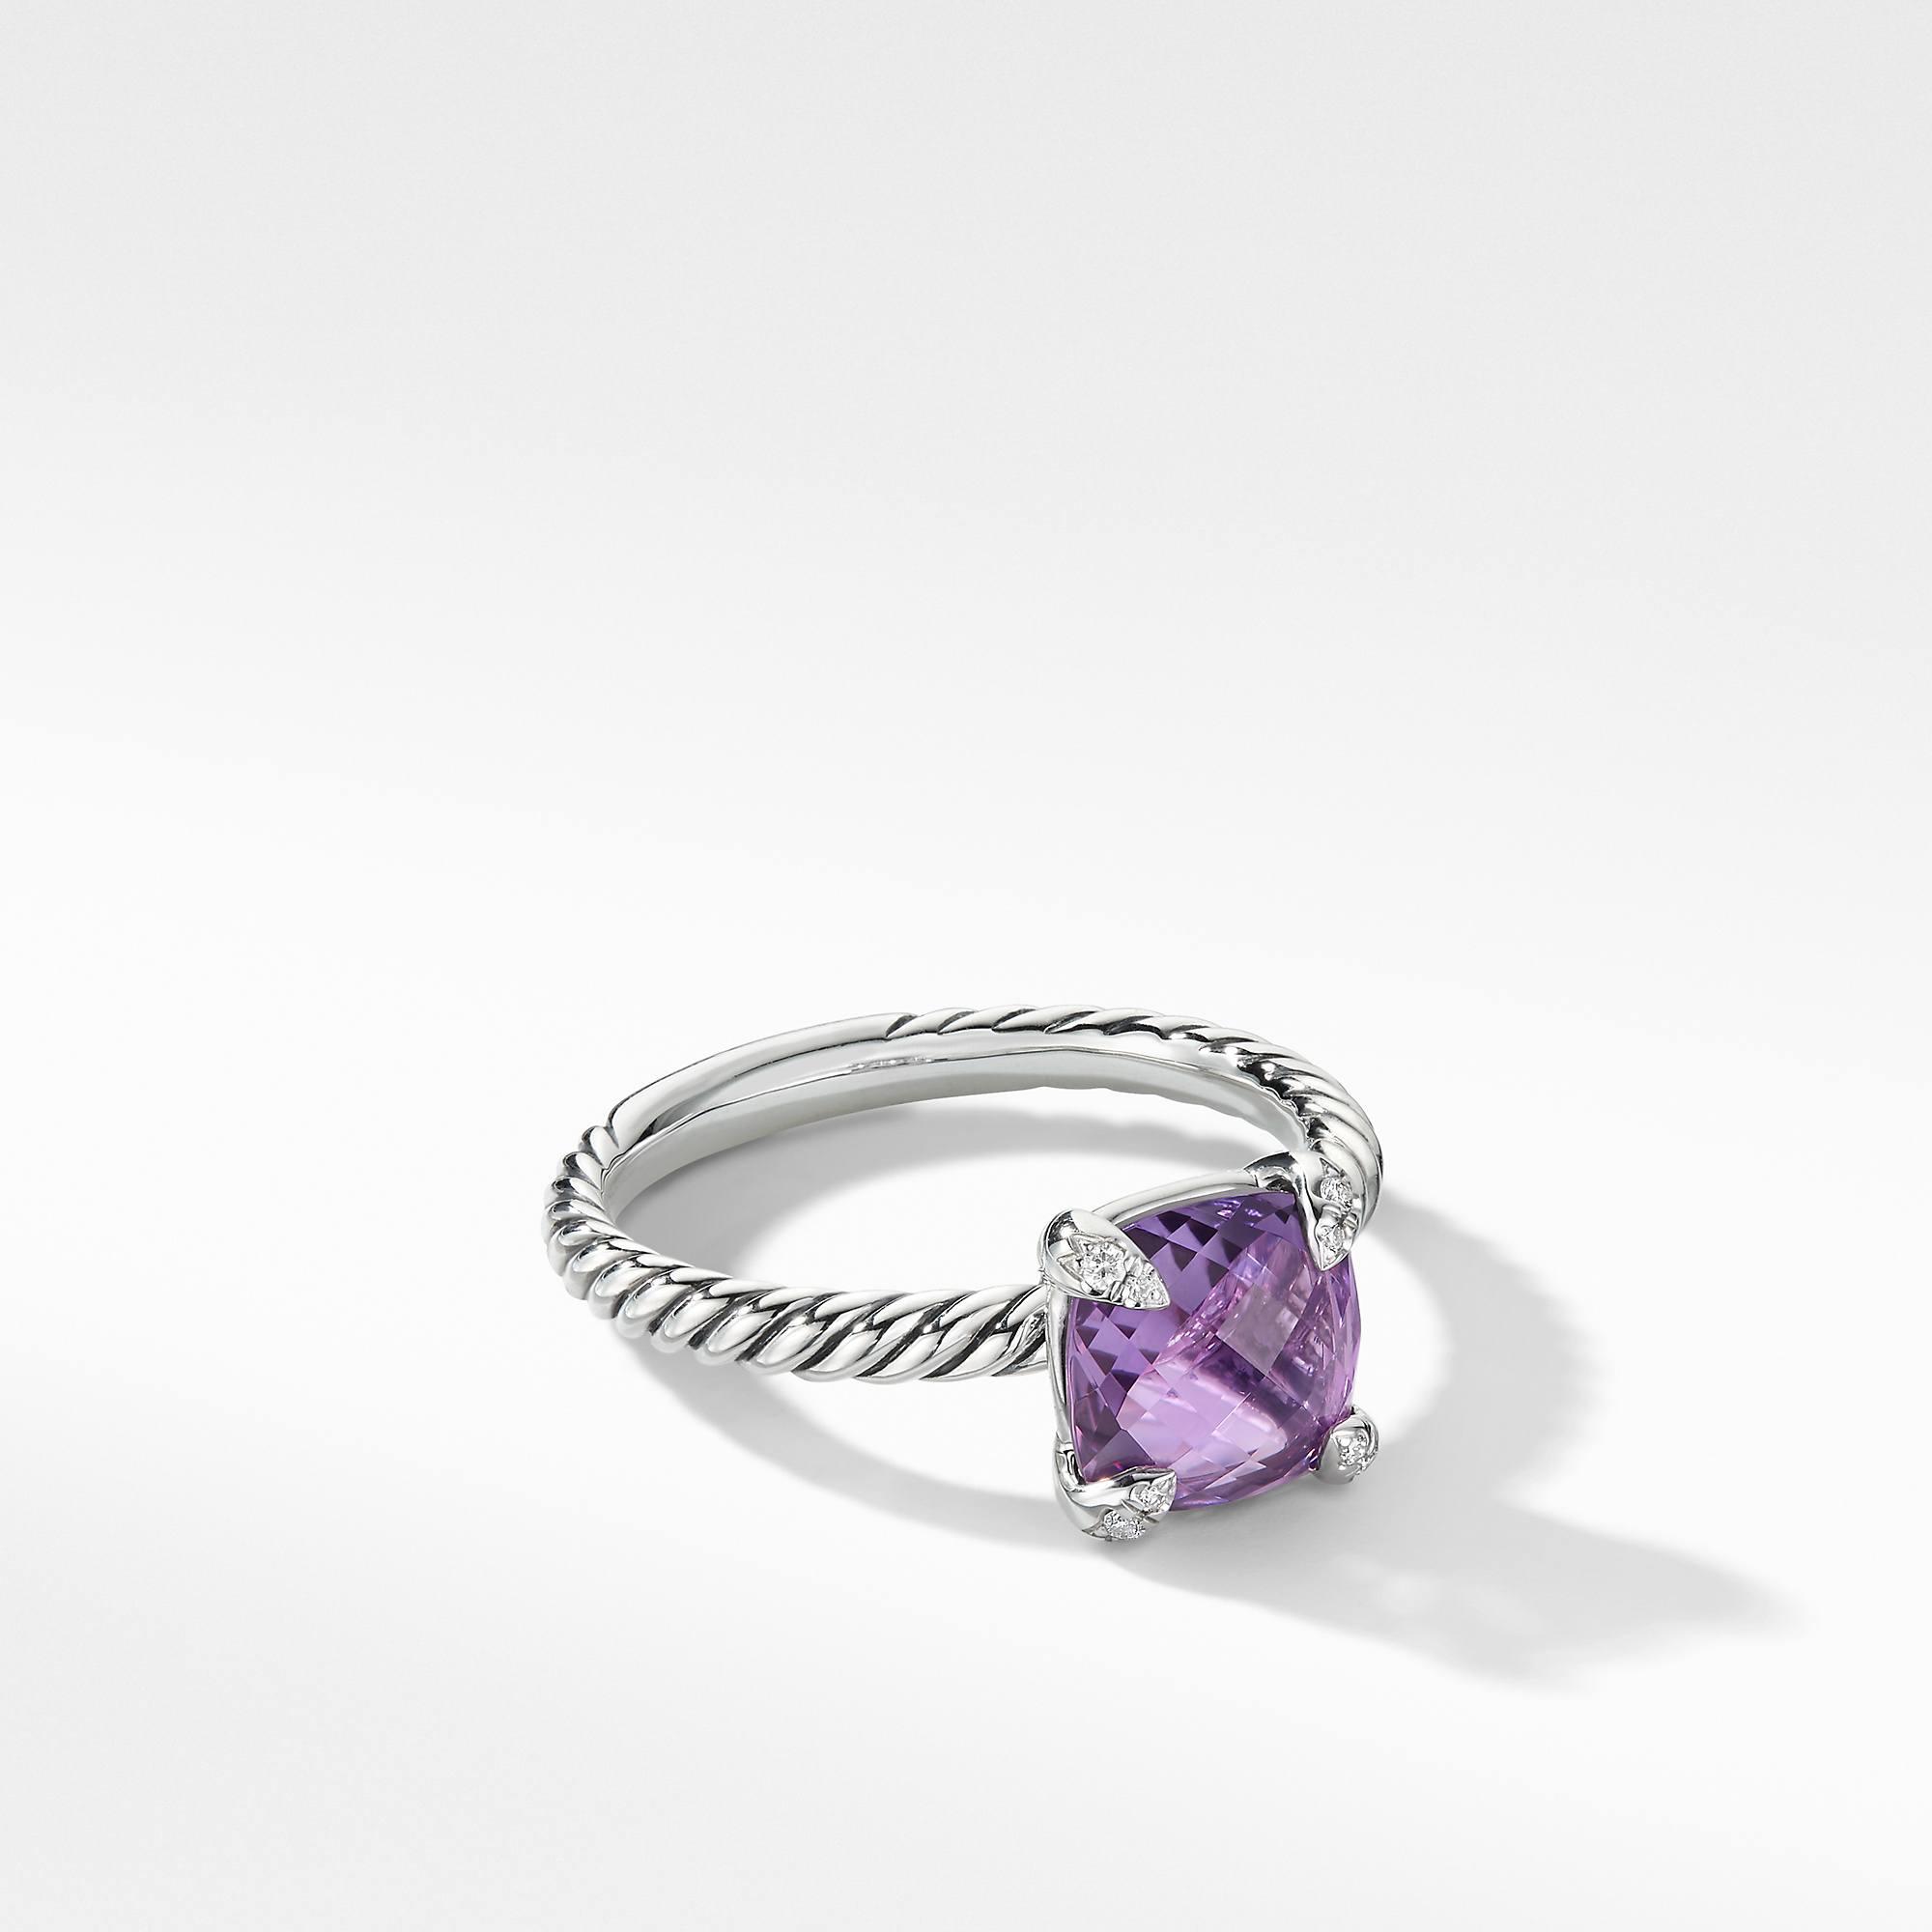 David Yurman Chatelaine Ring with Amethyst and Diamonds, size 6.5